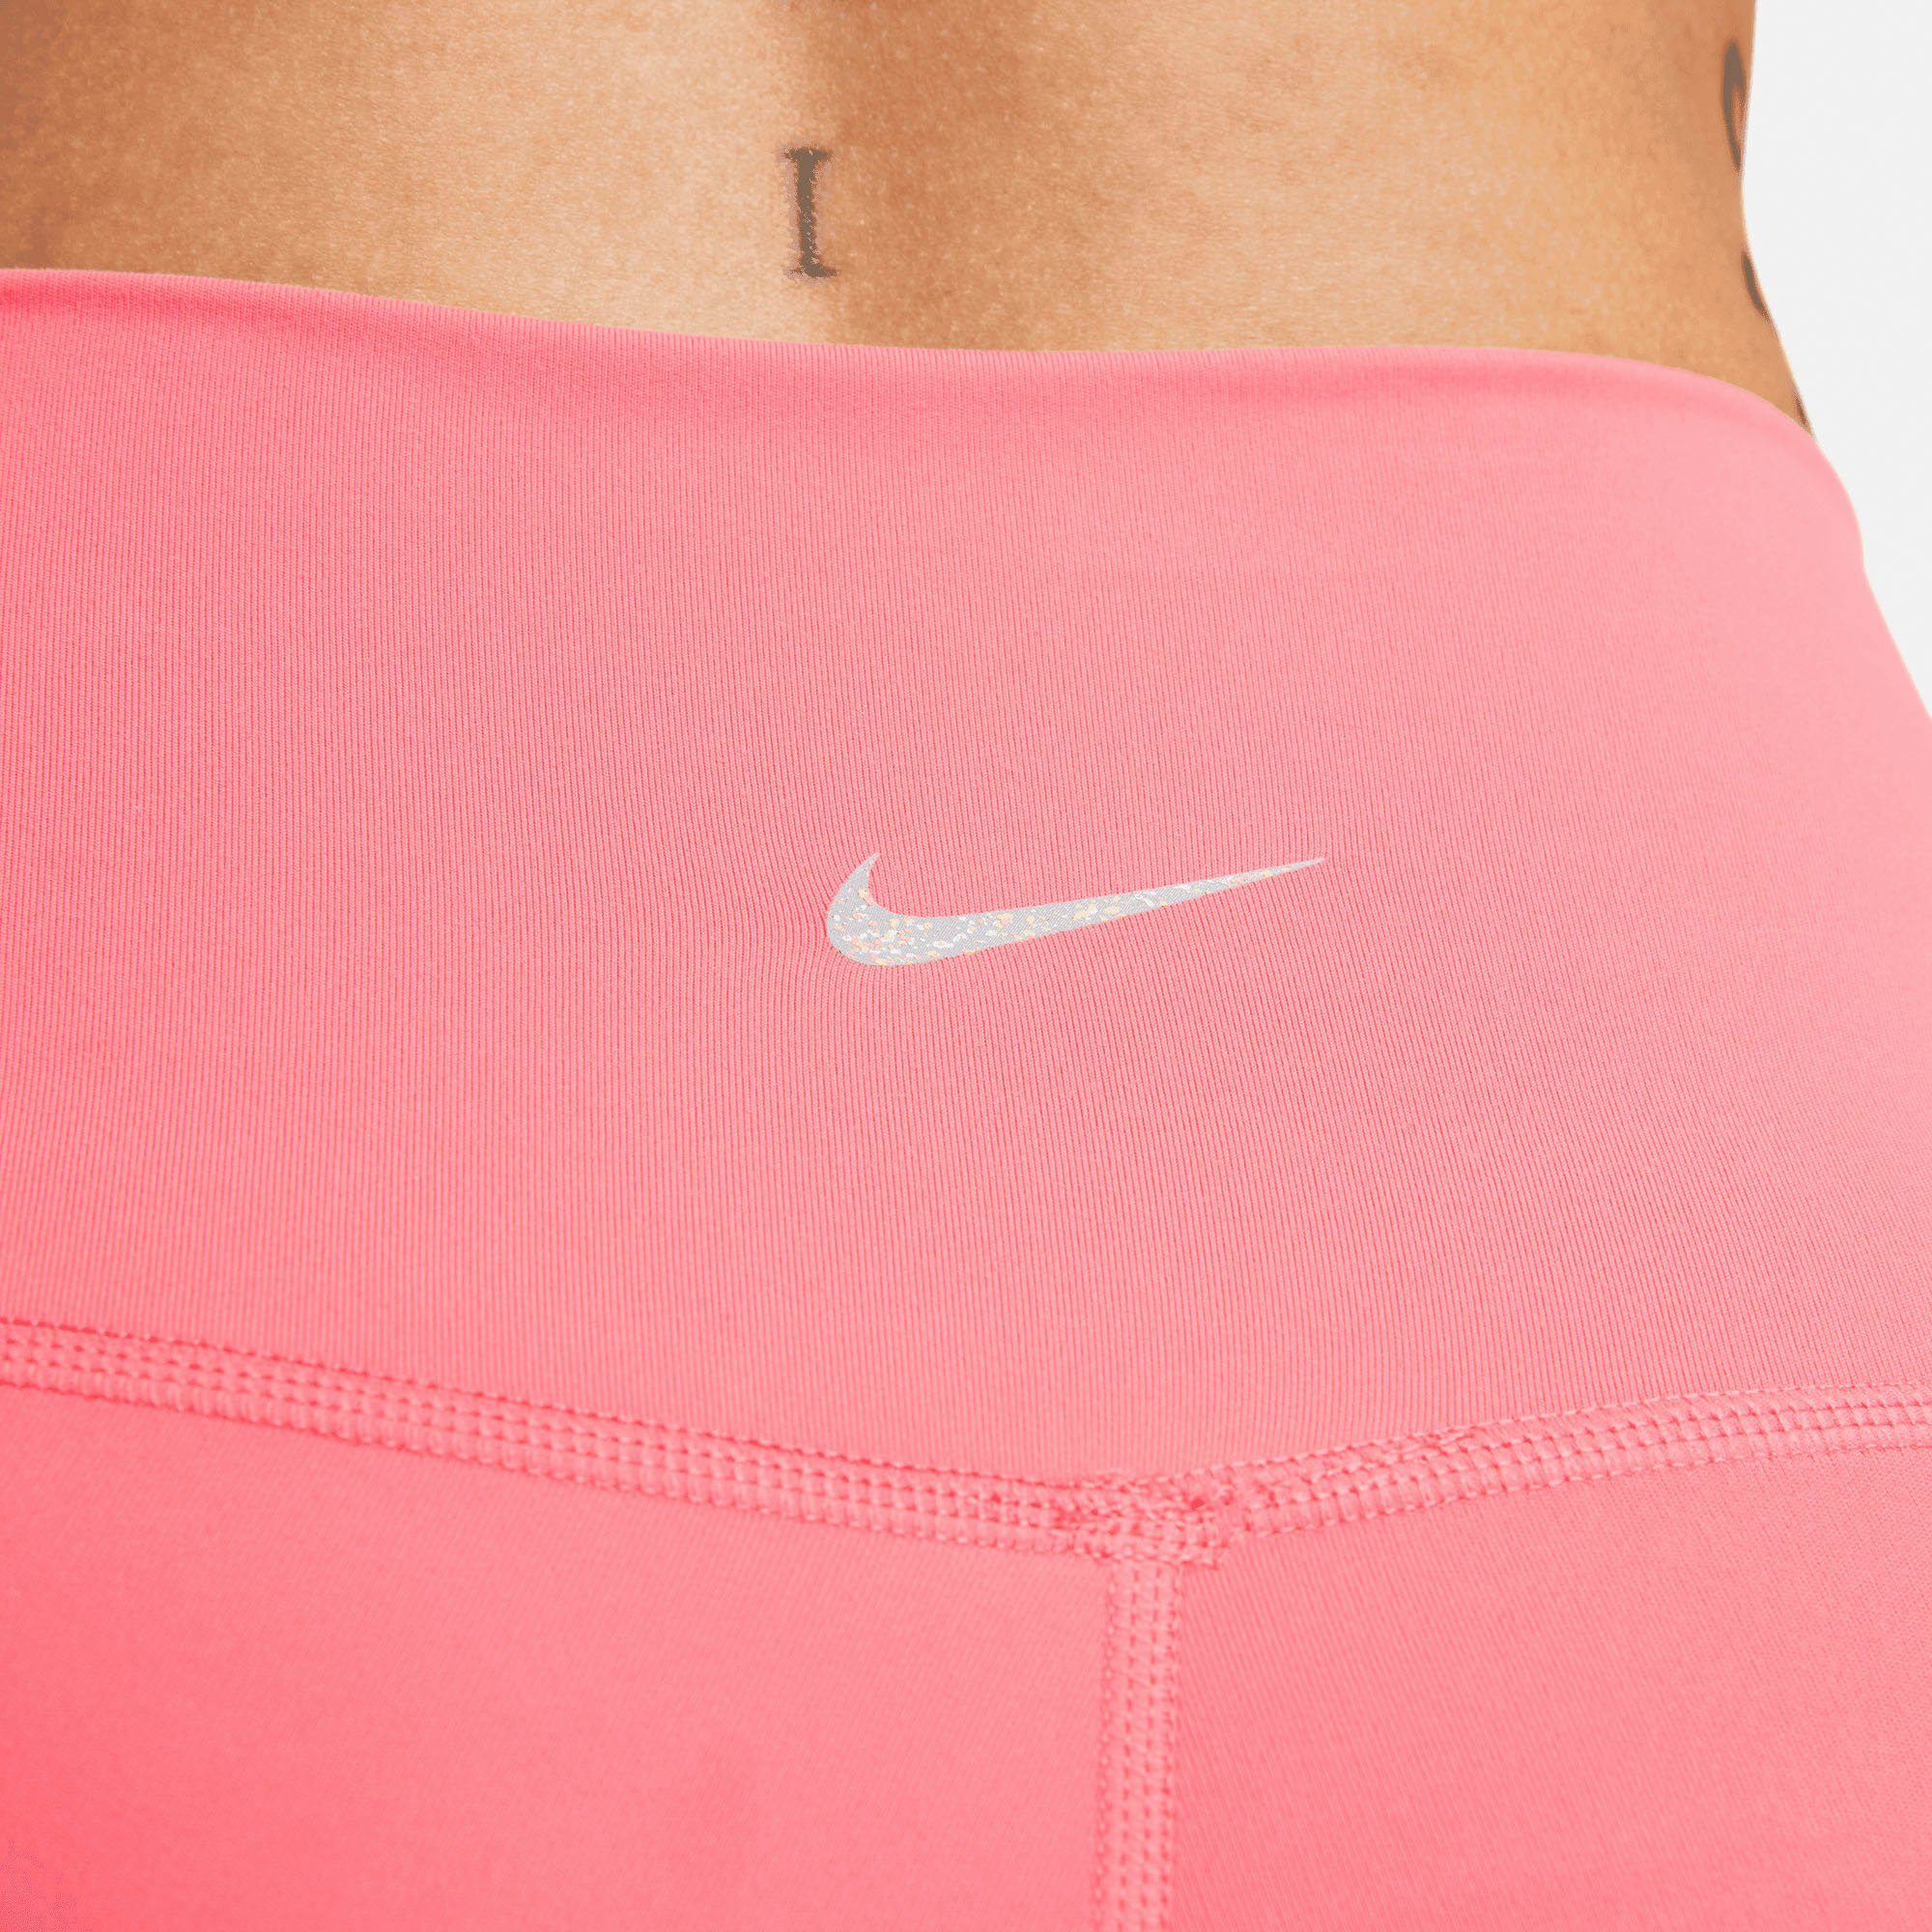 Nike Dri-FIT Yoga / Trainingstights Women's High-Waisted Leggings orange